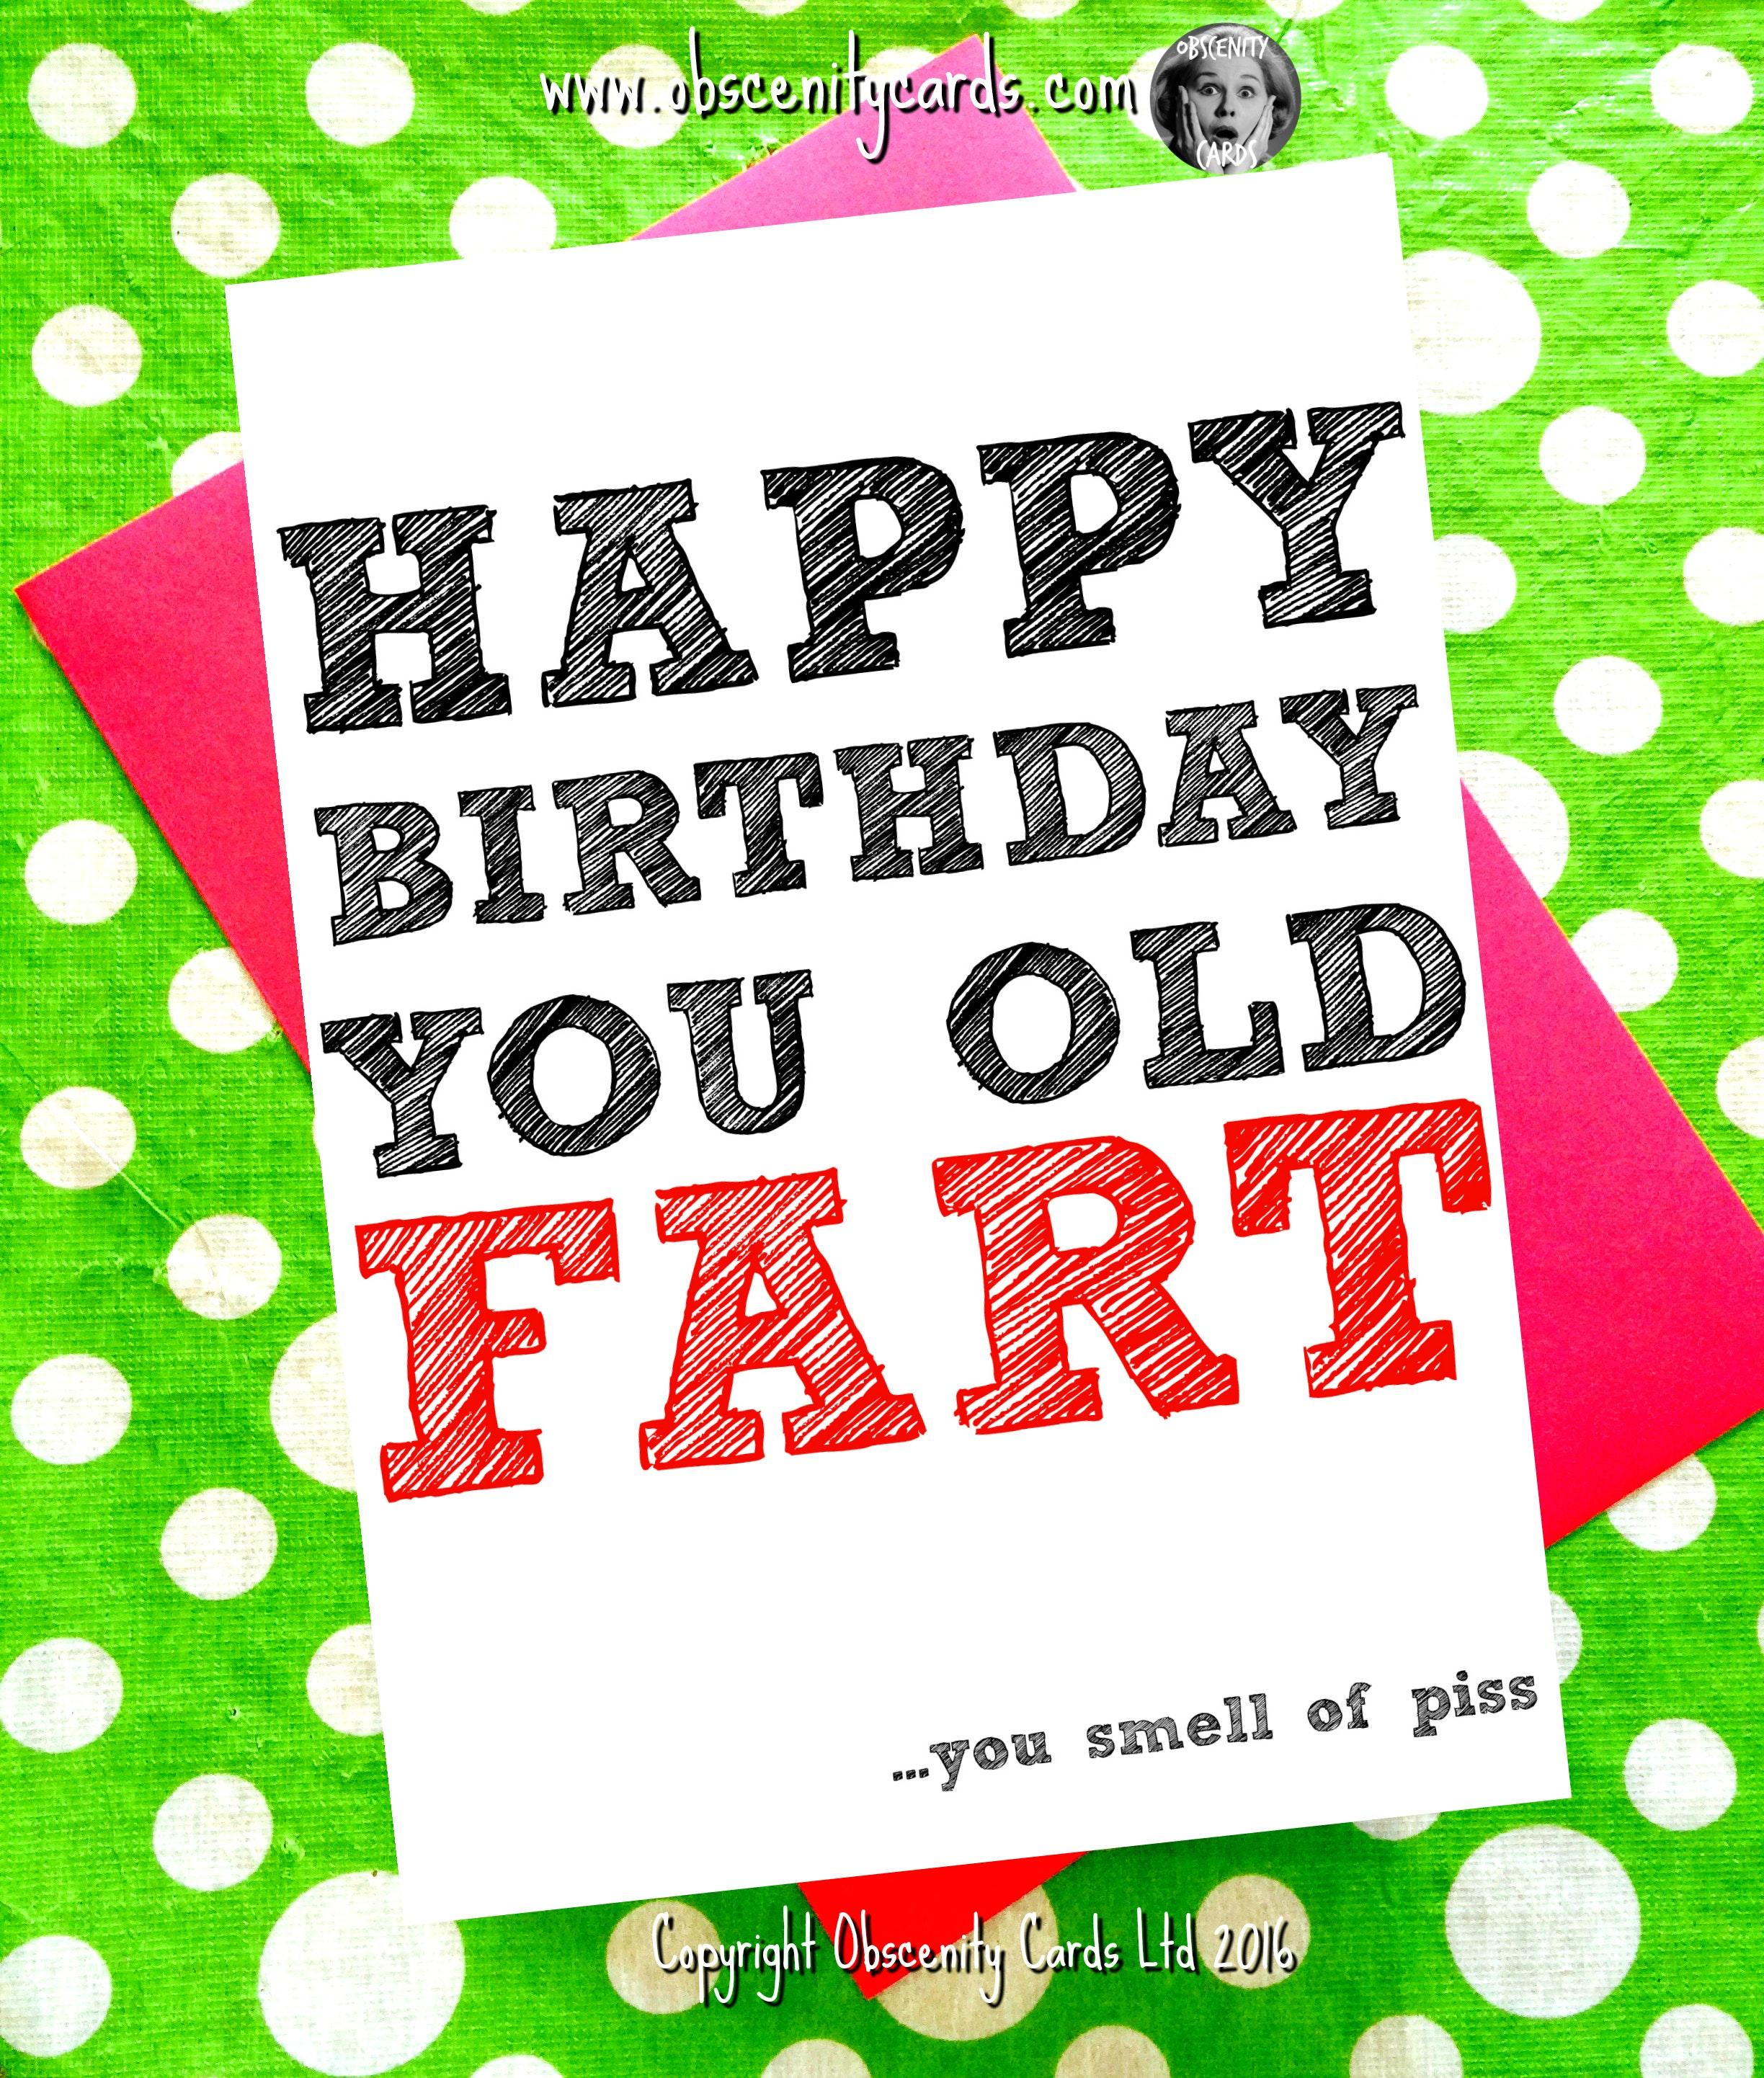 Happy Birthday Card You Old Fart